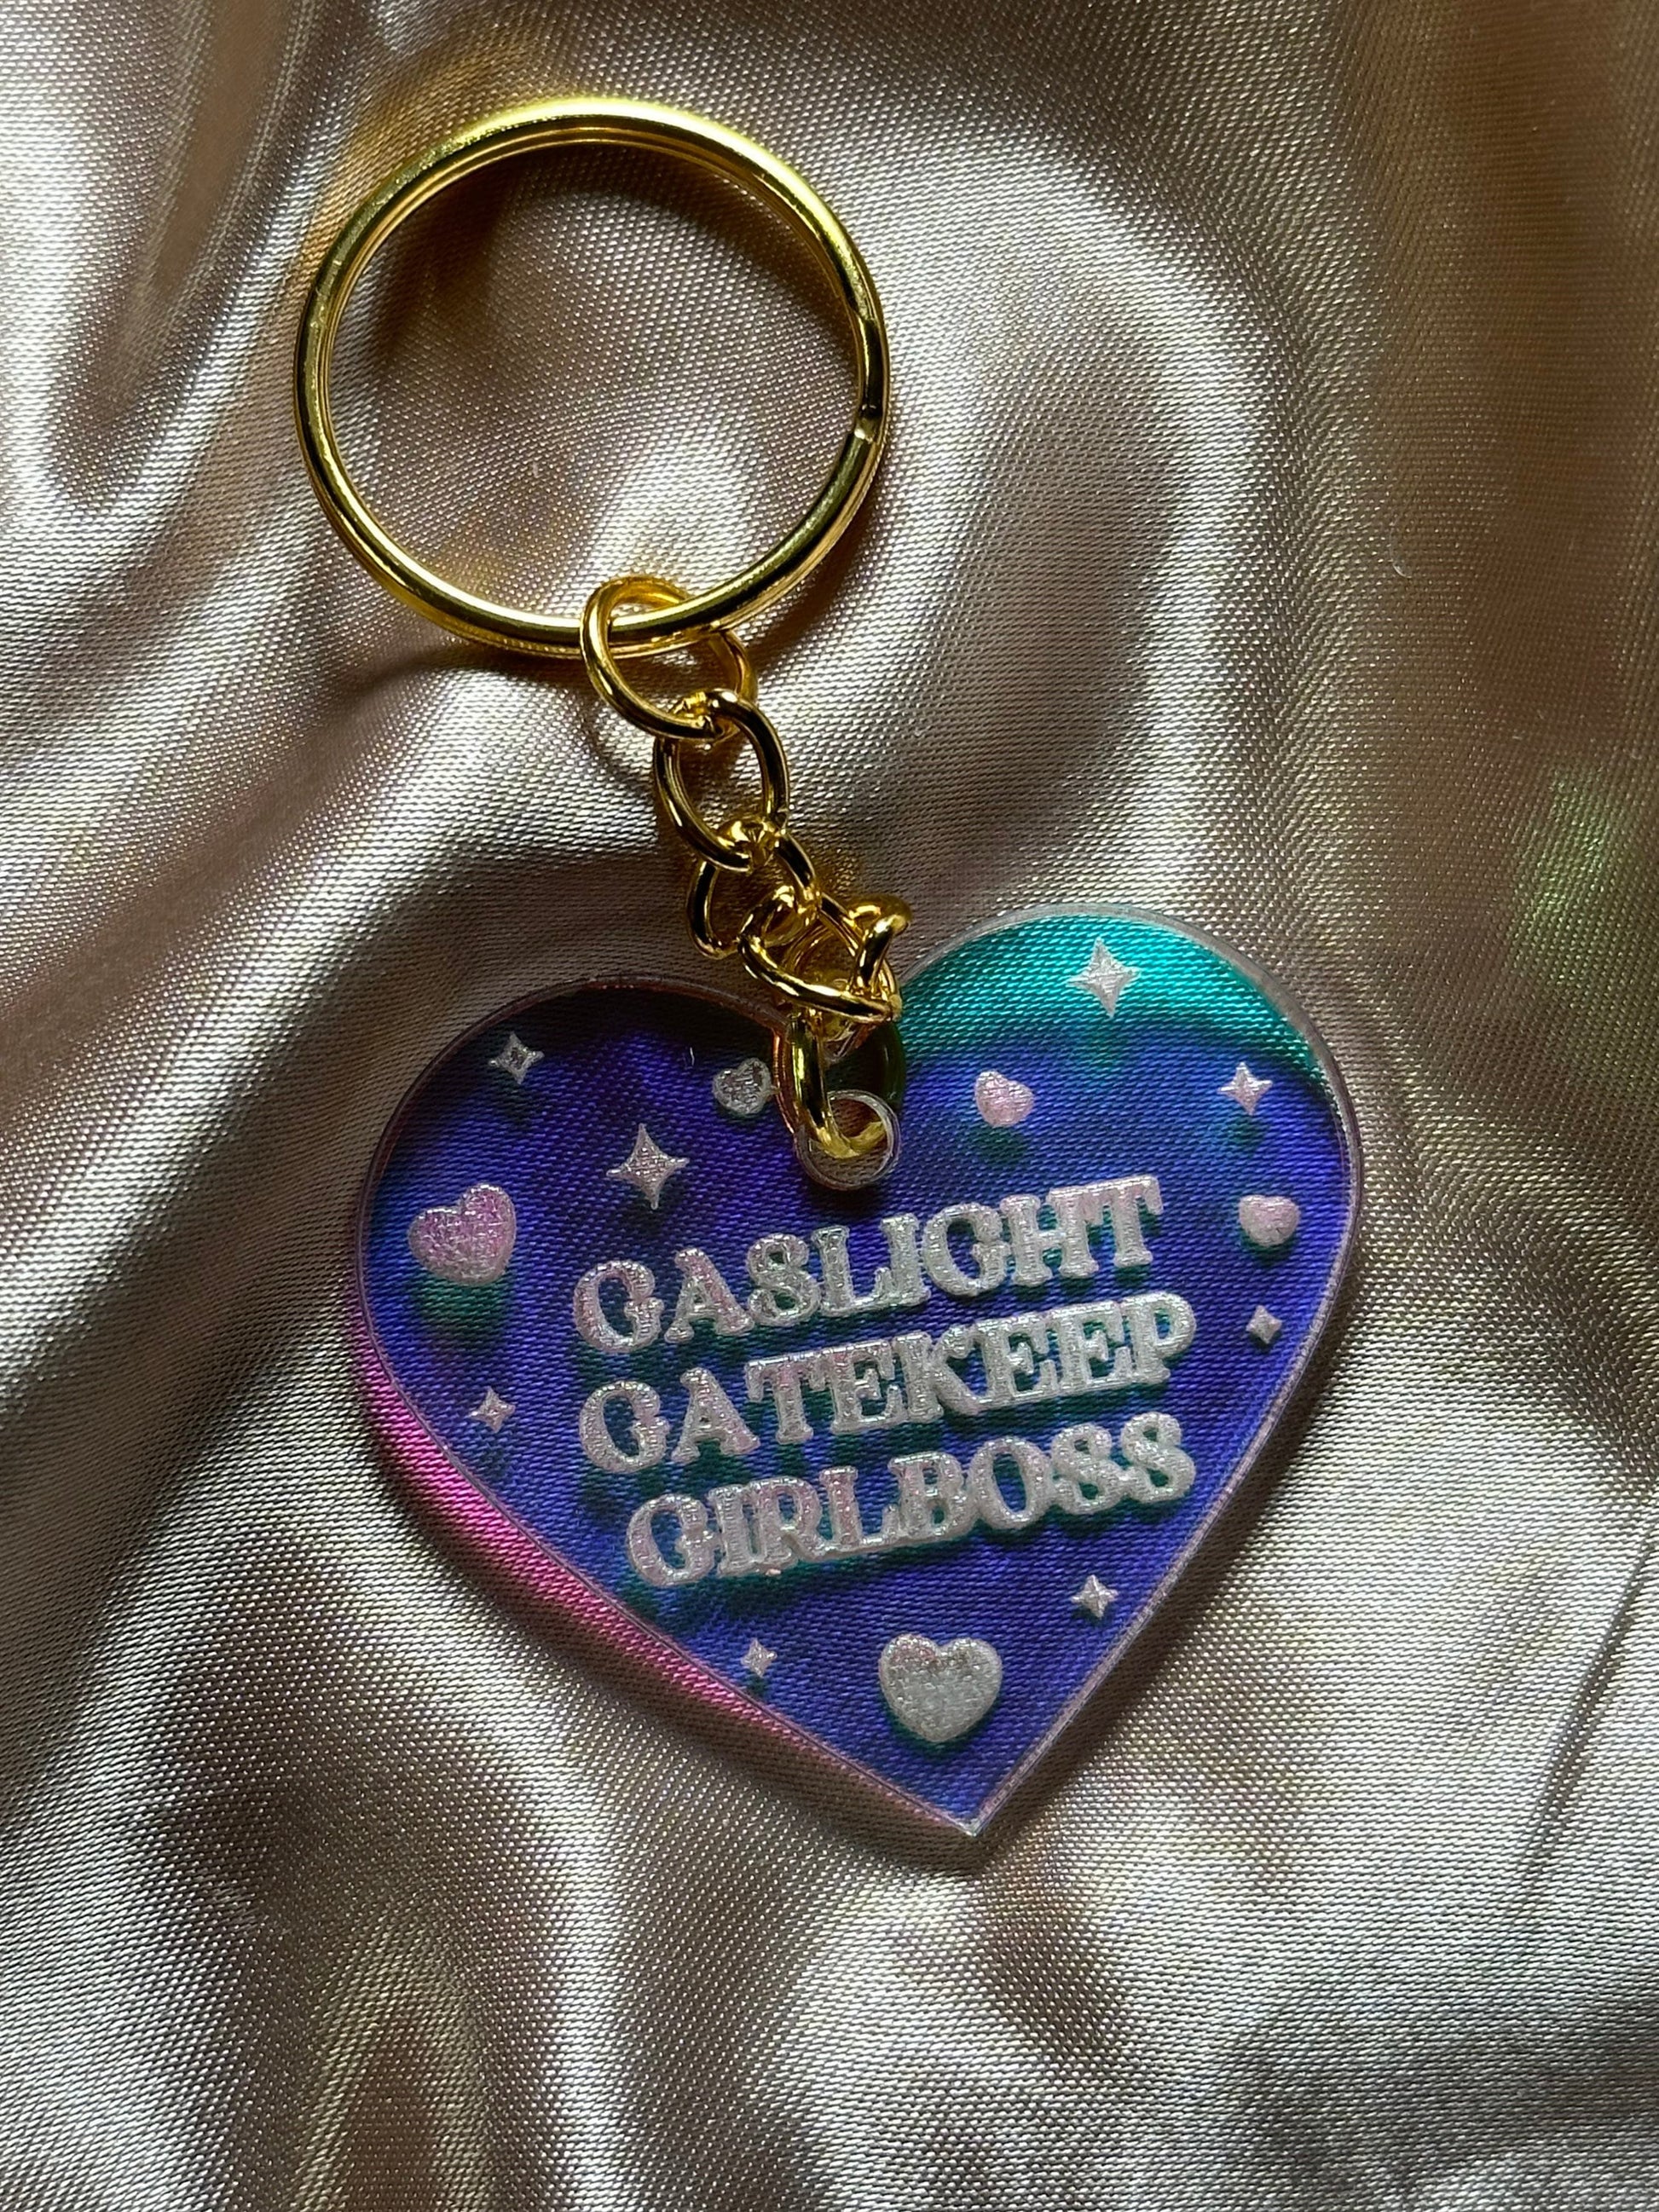 Made To Order Gaslight Gatekeeper Girlboss Iridescent Acrylic Keychain